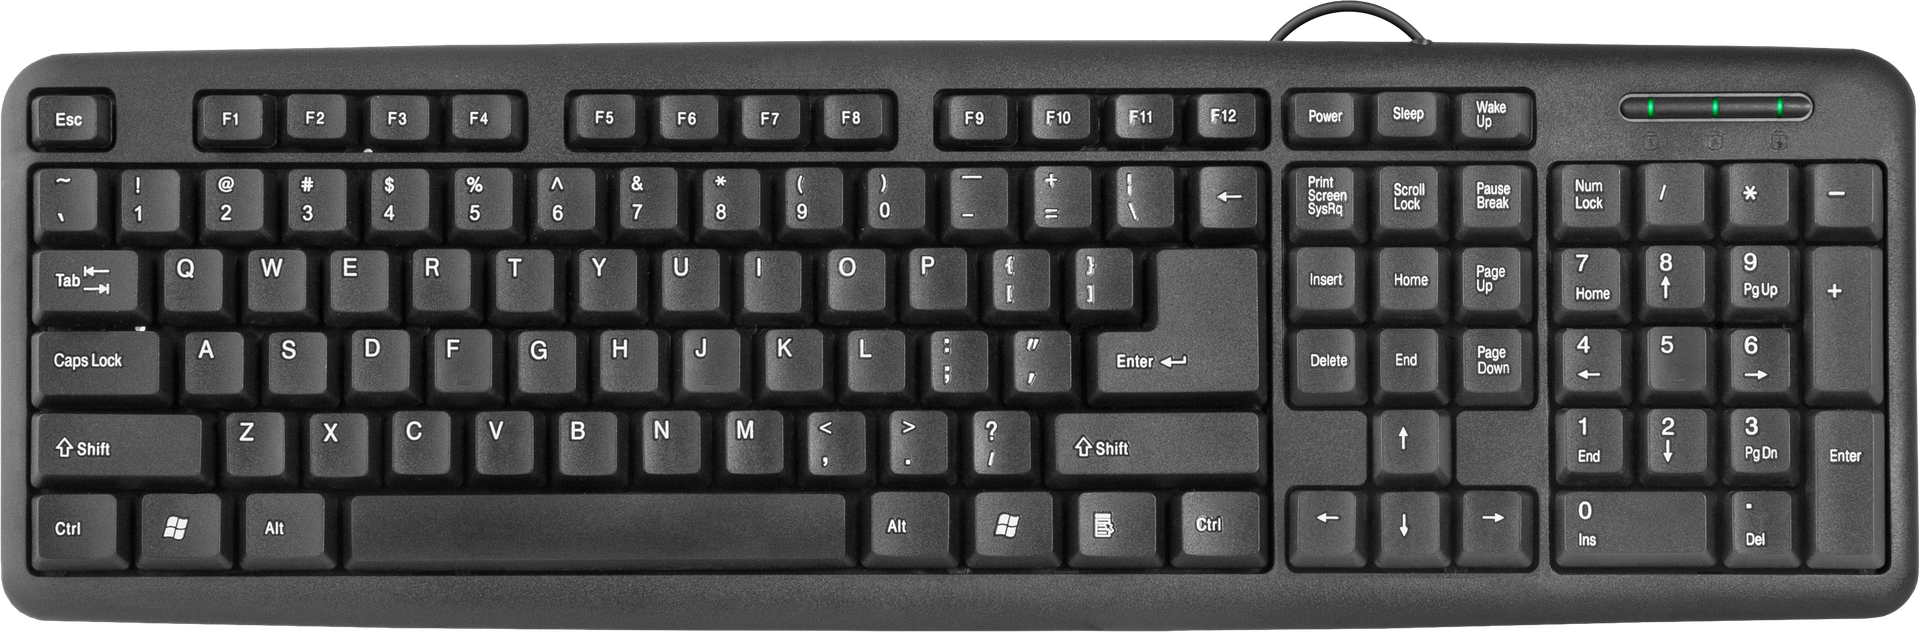 Клавиатура DEFENDER HB-420 RU,черый,полноразмерная